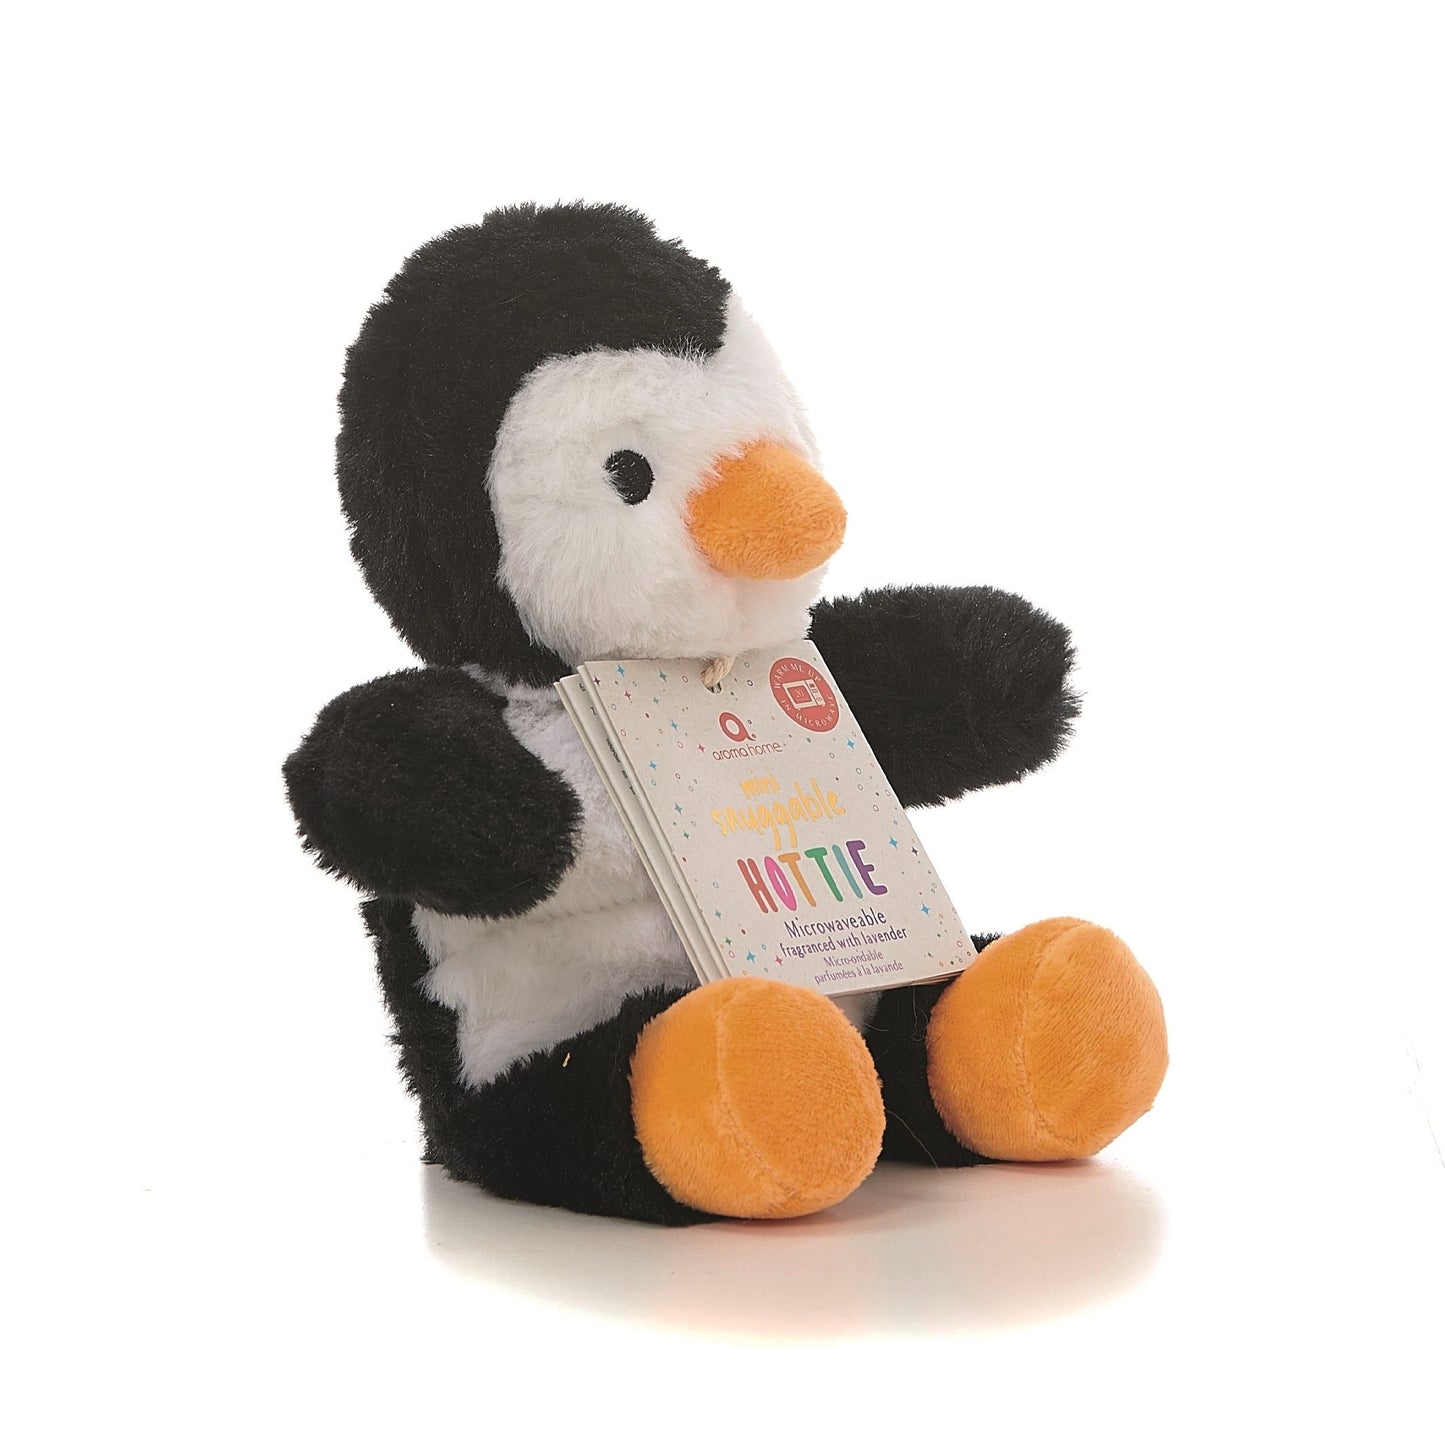 Mini Snuggable Hottie - Penguin